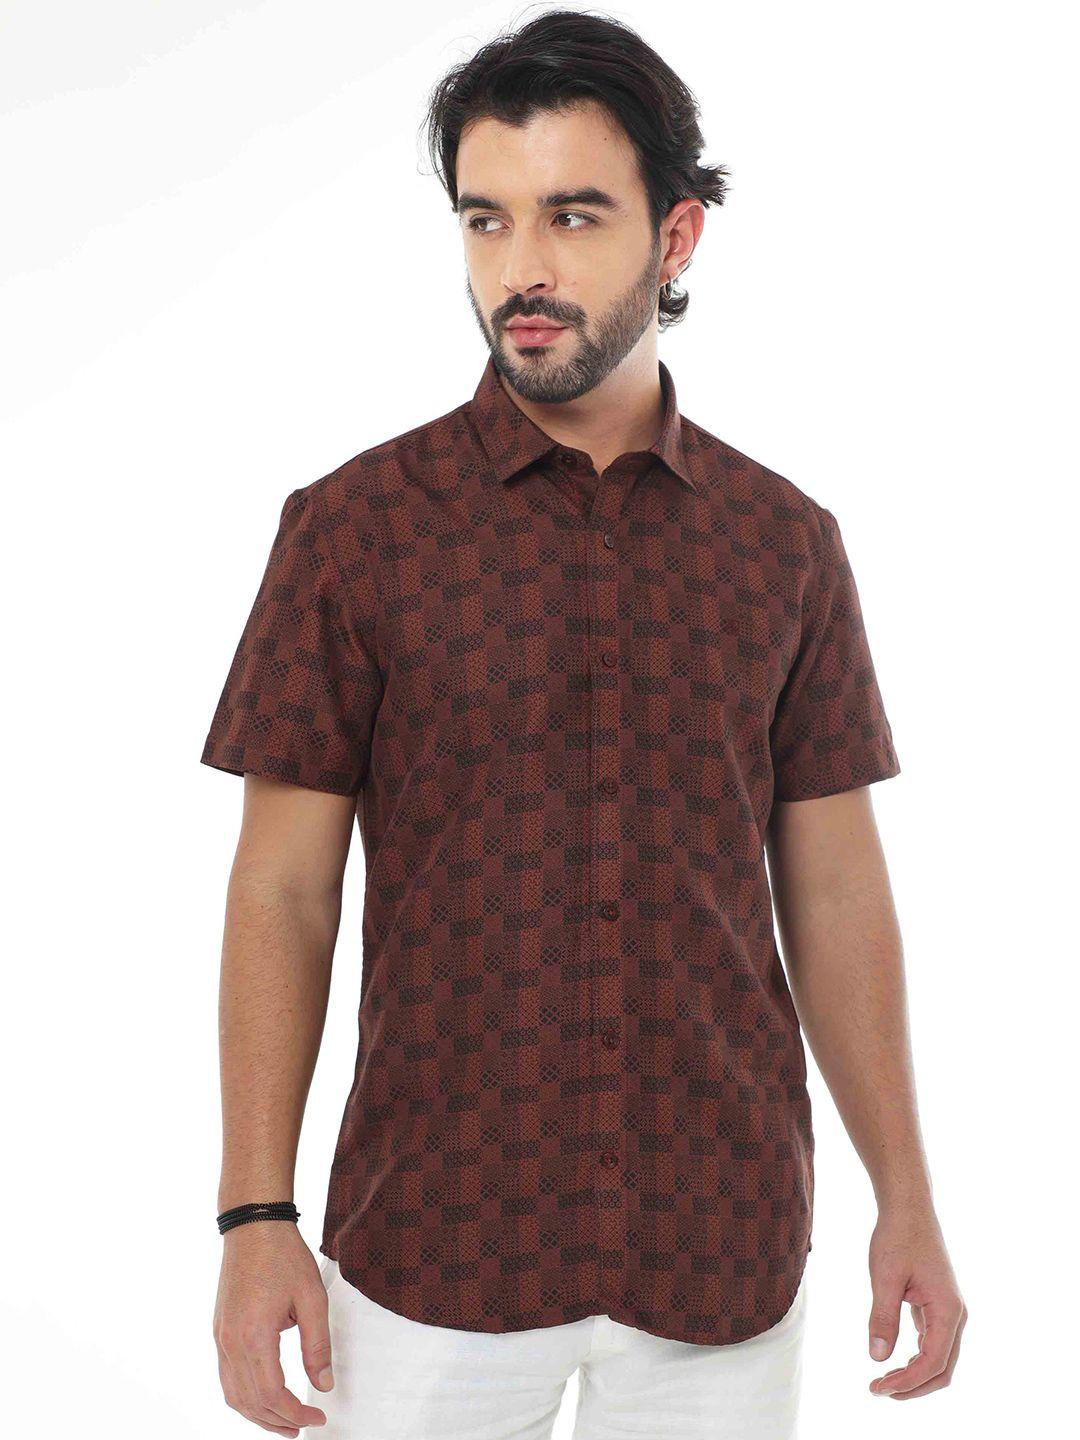 soratia geometric printed cotton casual shirt